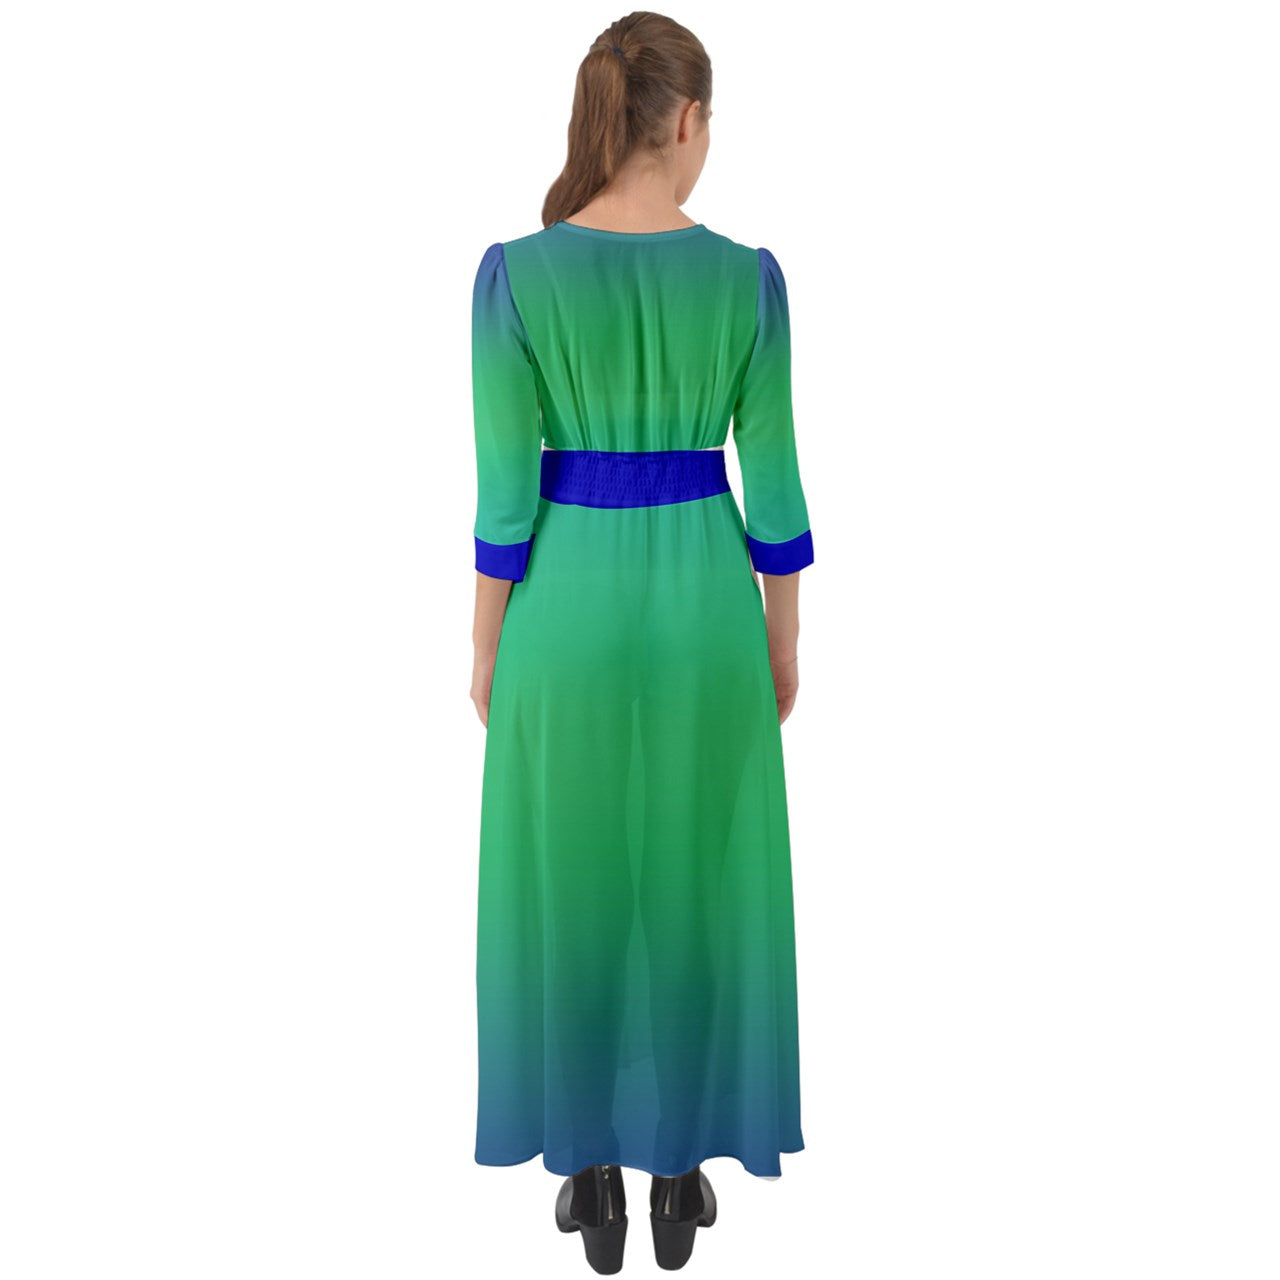 Ombre Button Up Boho Maxi Dress, "Ocean Breeze Elegance", Plus Size Dress